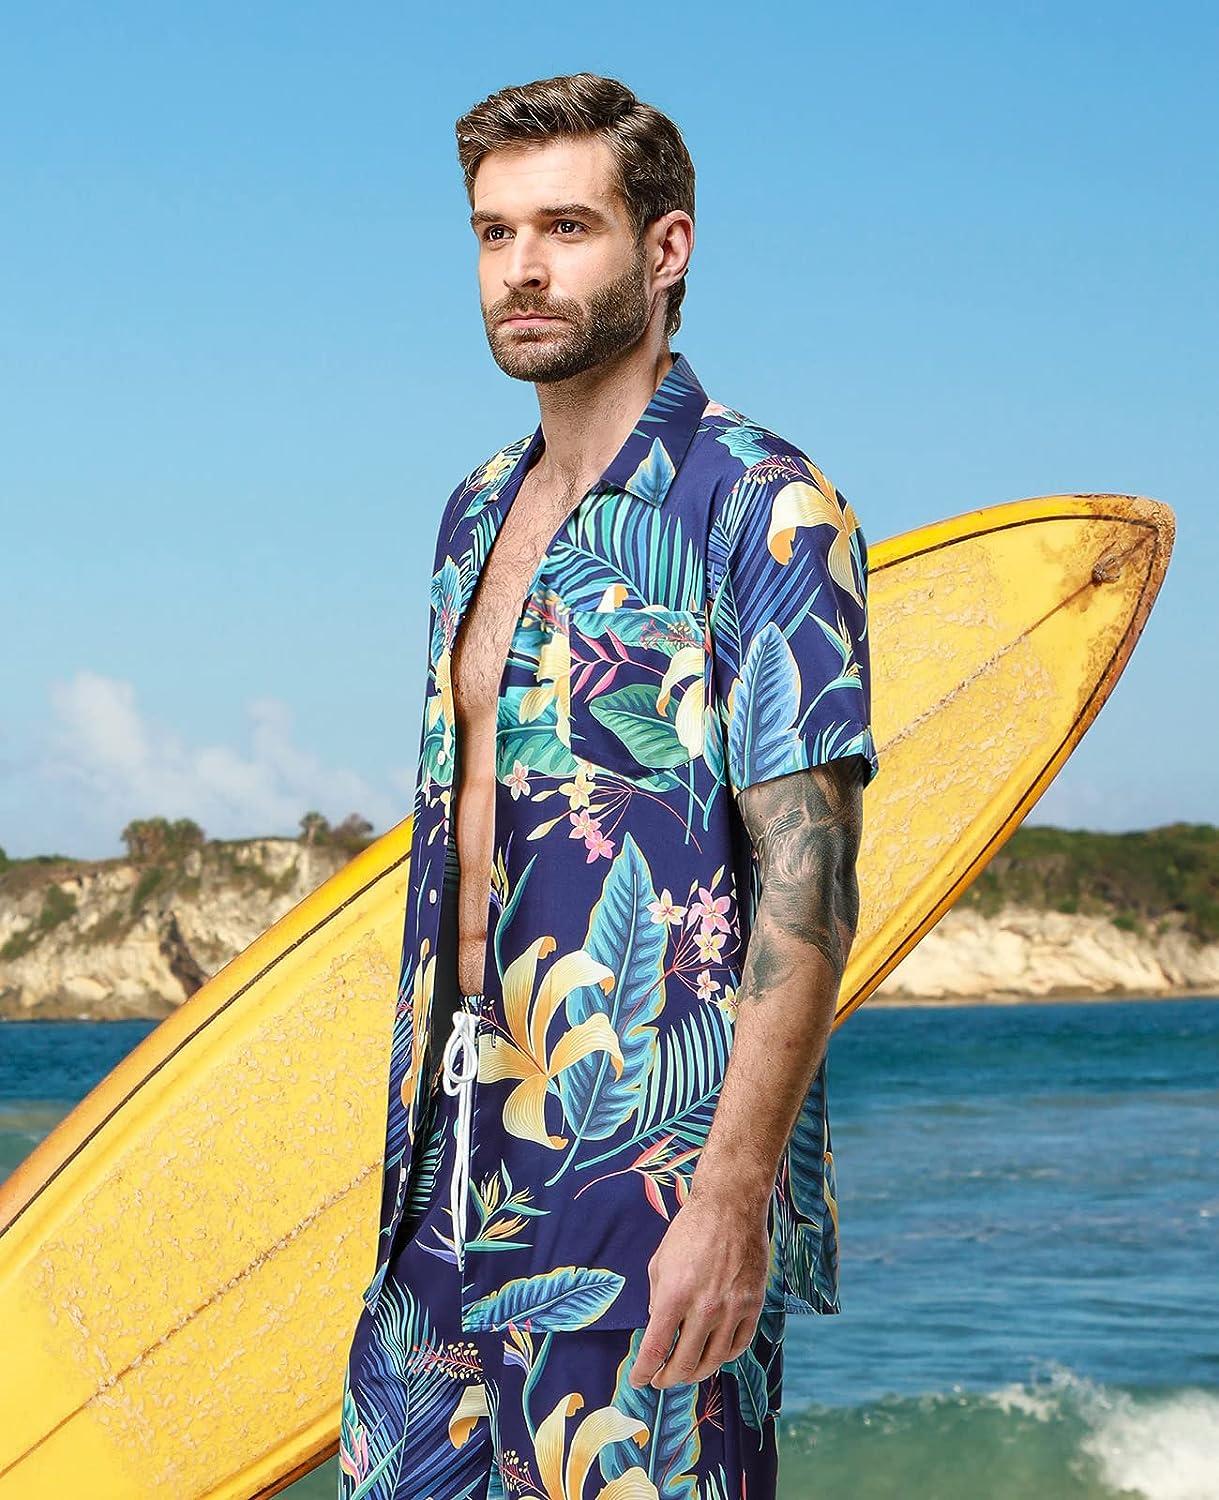 Men's Hawaiian Shirts and Casual Button Down Shirts